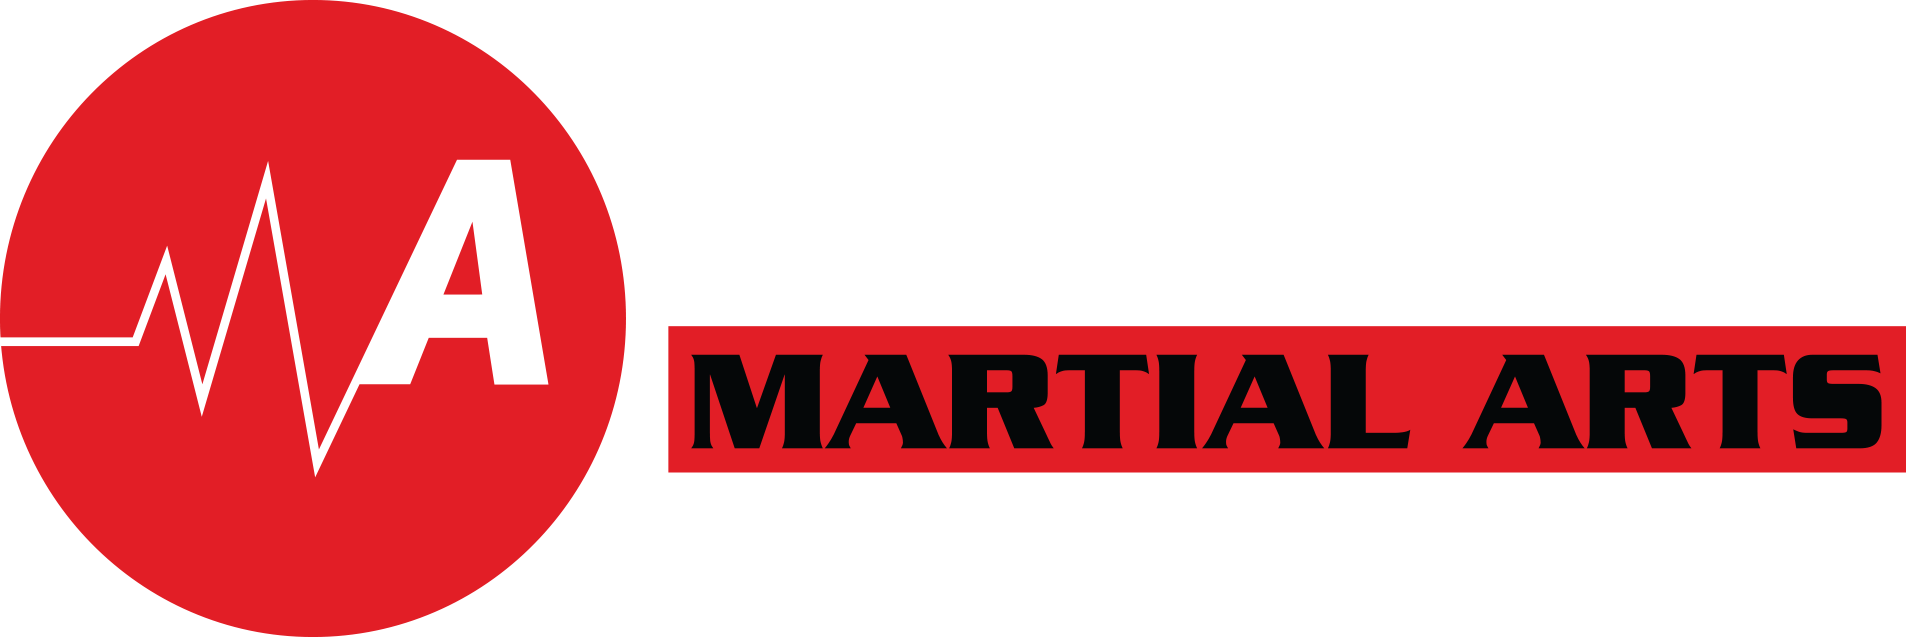 Adrenaline Martial Arts 